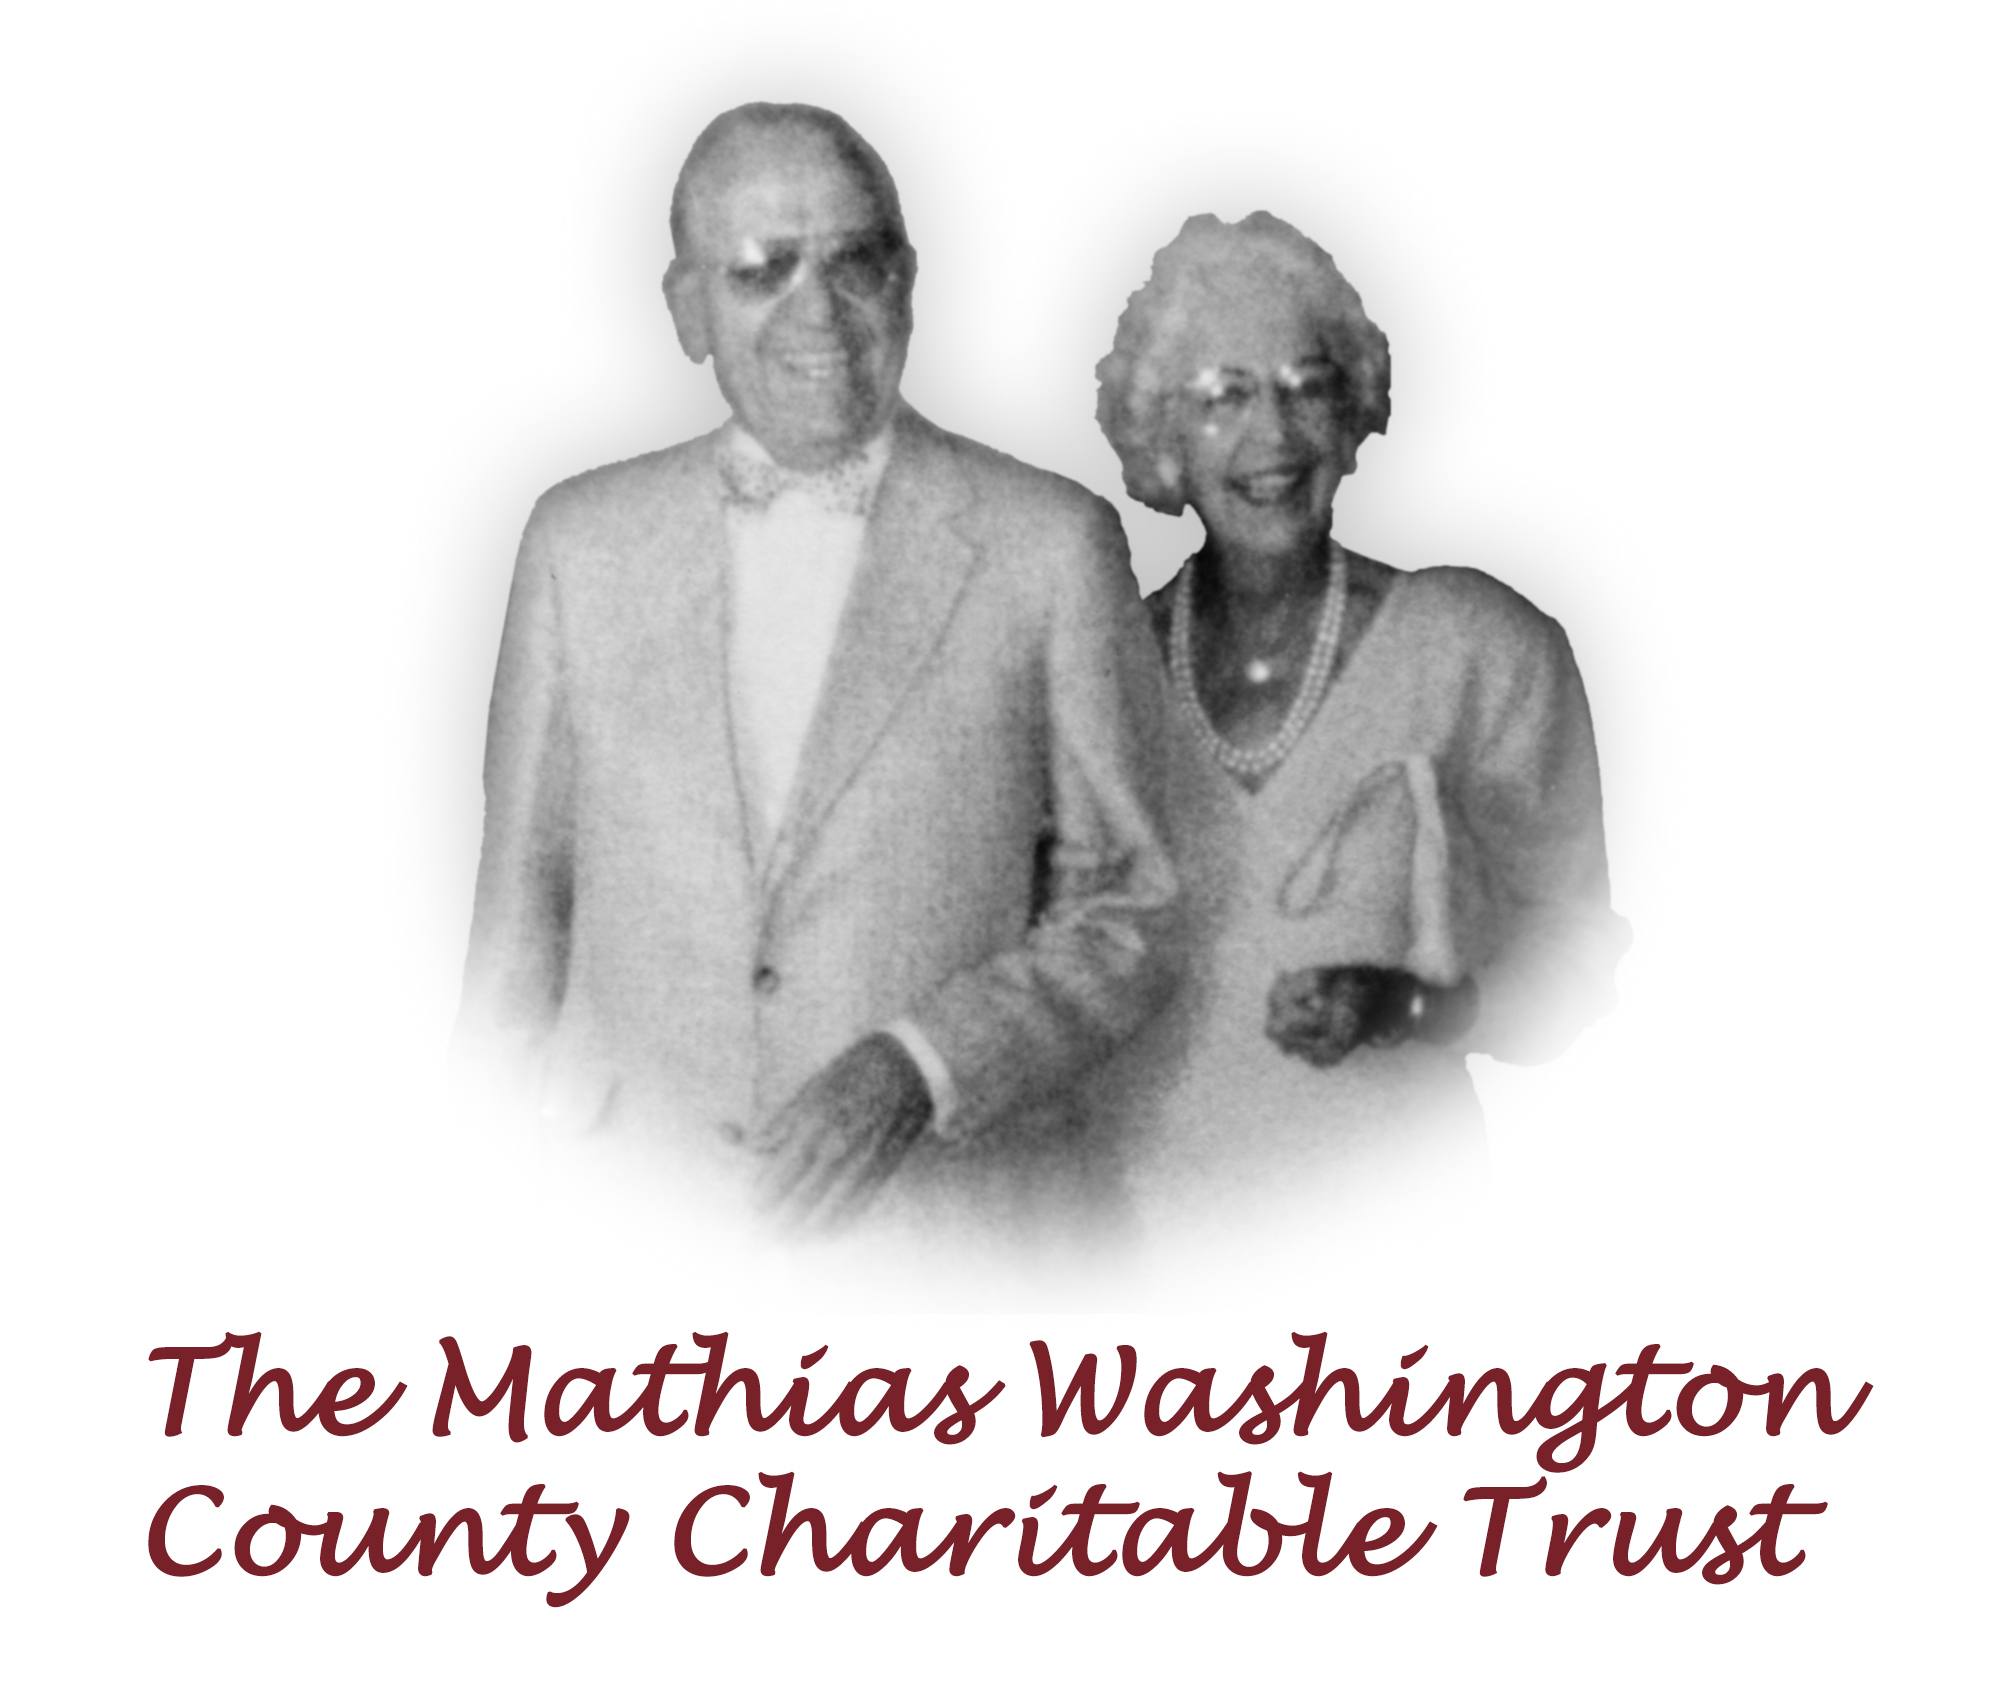 The Mathias Washington County Charitable Trust